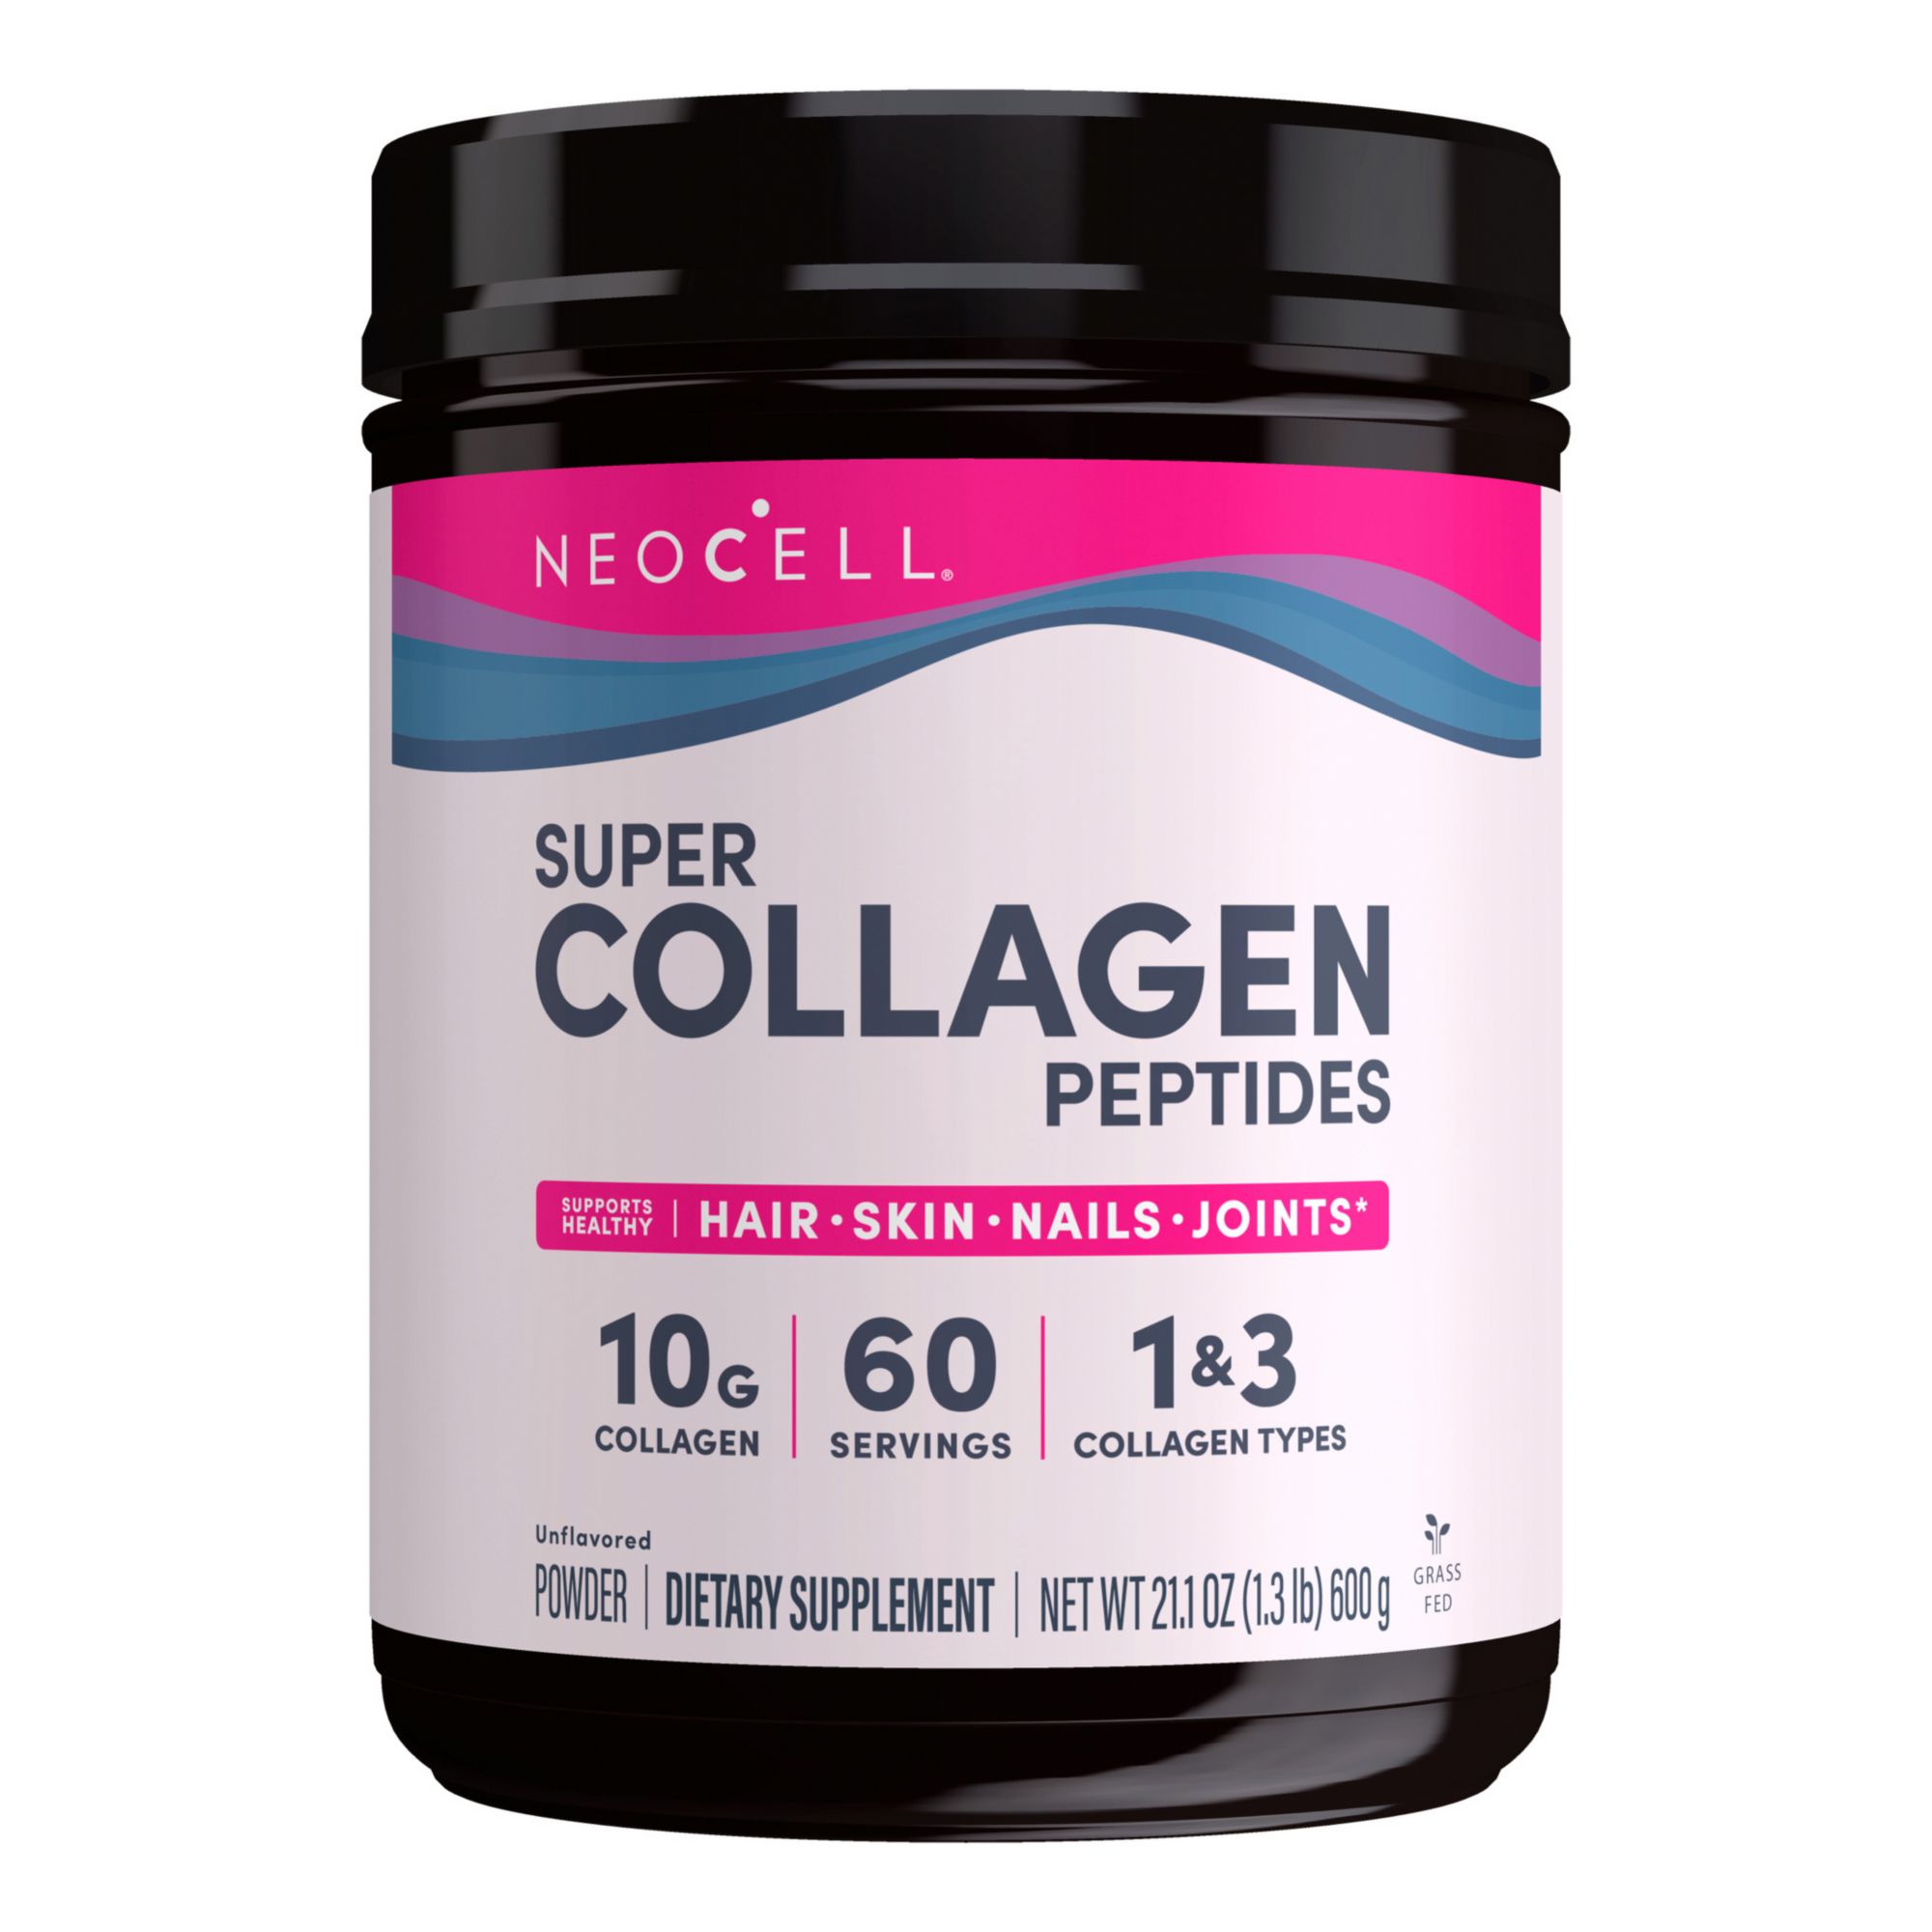 NeoCell Super Collagen Peptides, 21.2 oz.